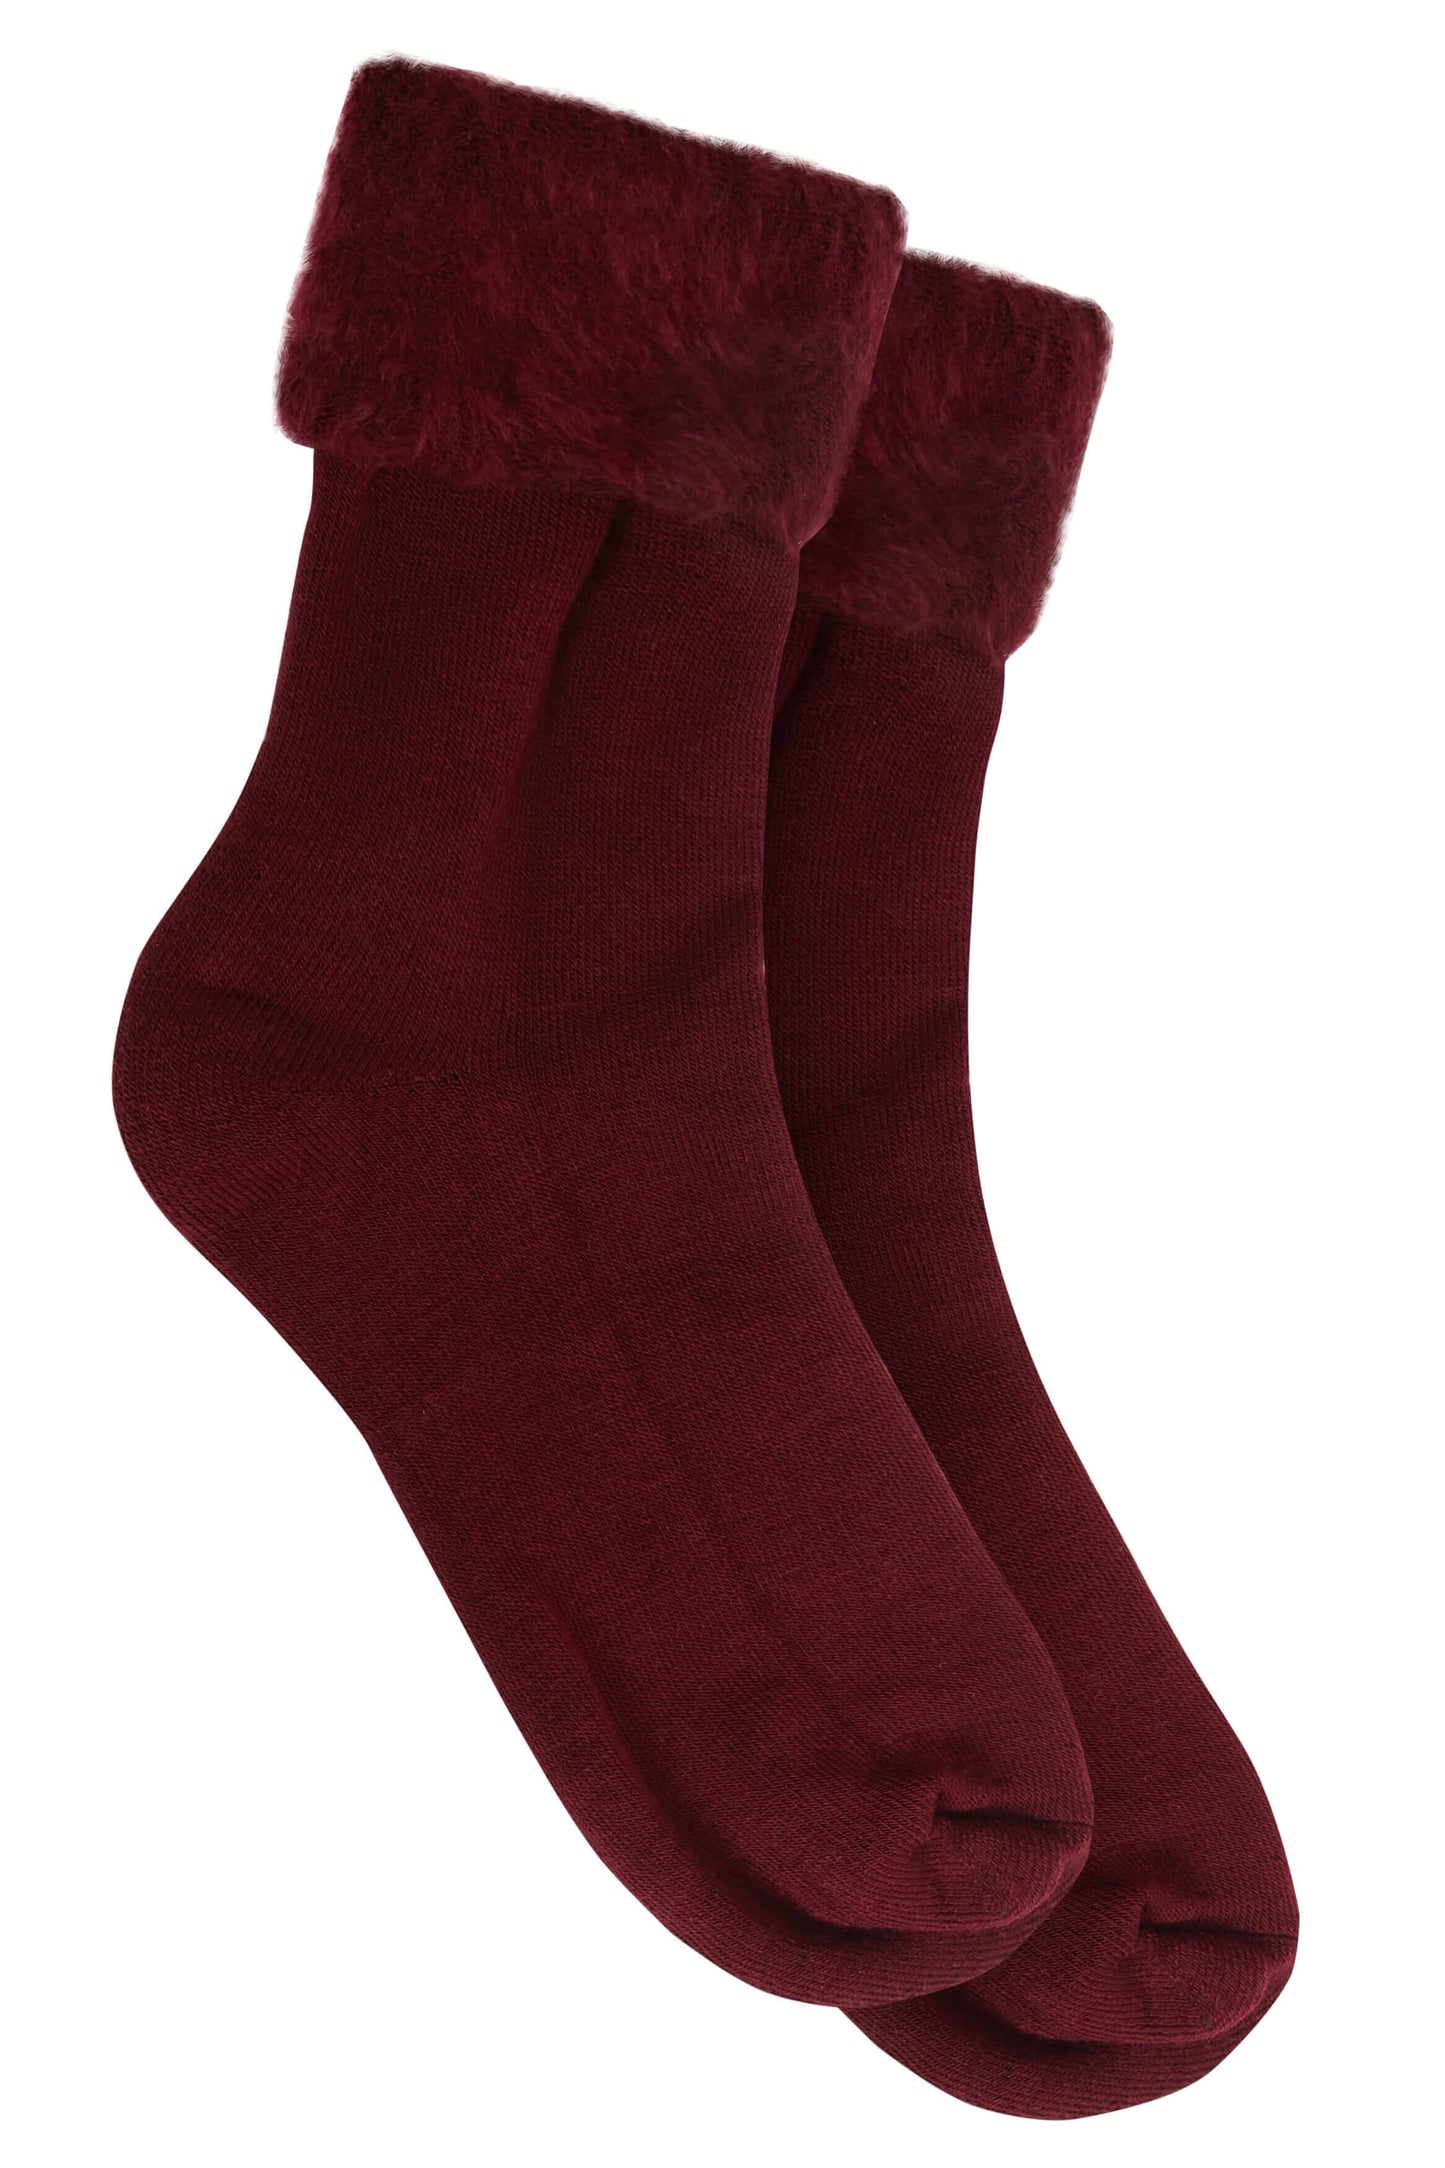 Pack Of 6 Men's Thermal Bed Socks Super Soft Fluffy Socks. Buy now for £12.00. A Socks by Sock Stack. 6-11, assorted, black, black socks, blue, boot socks, brown, burgandy, charcoal, christmas, cosy, designer, fluffy, footwear, grey, grey socks, mens, men